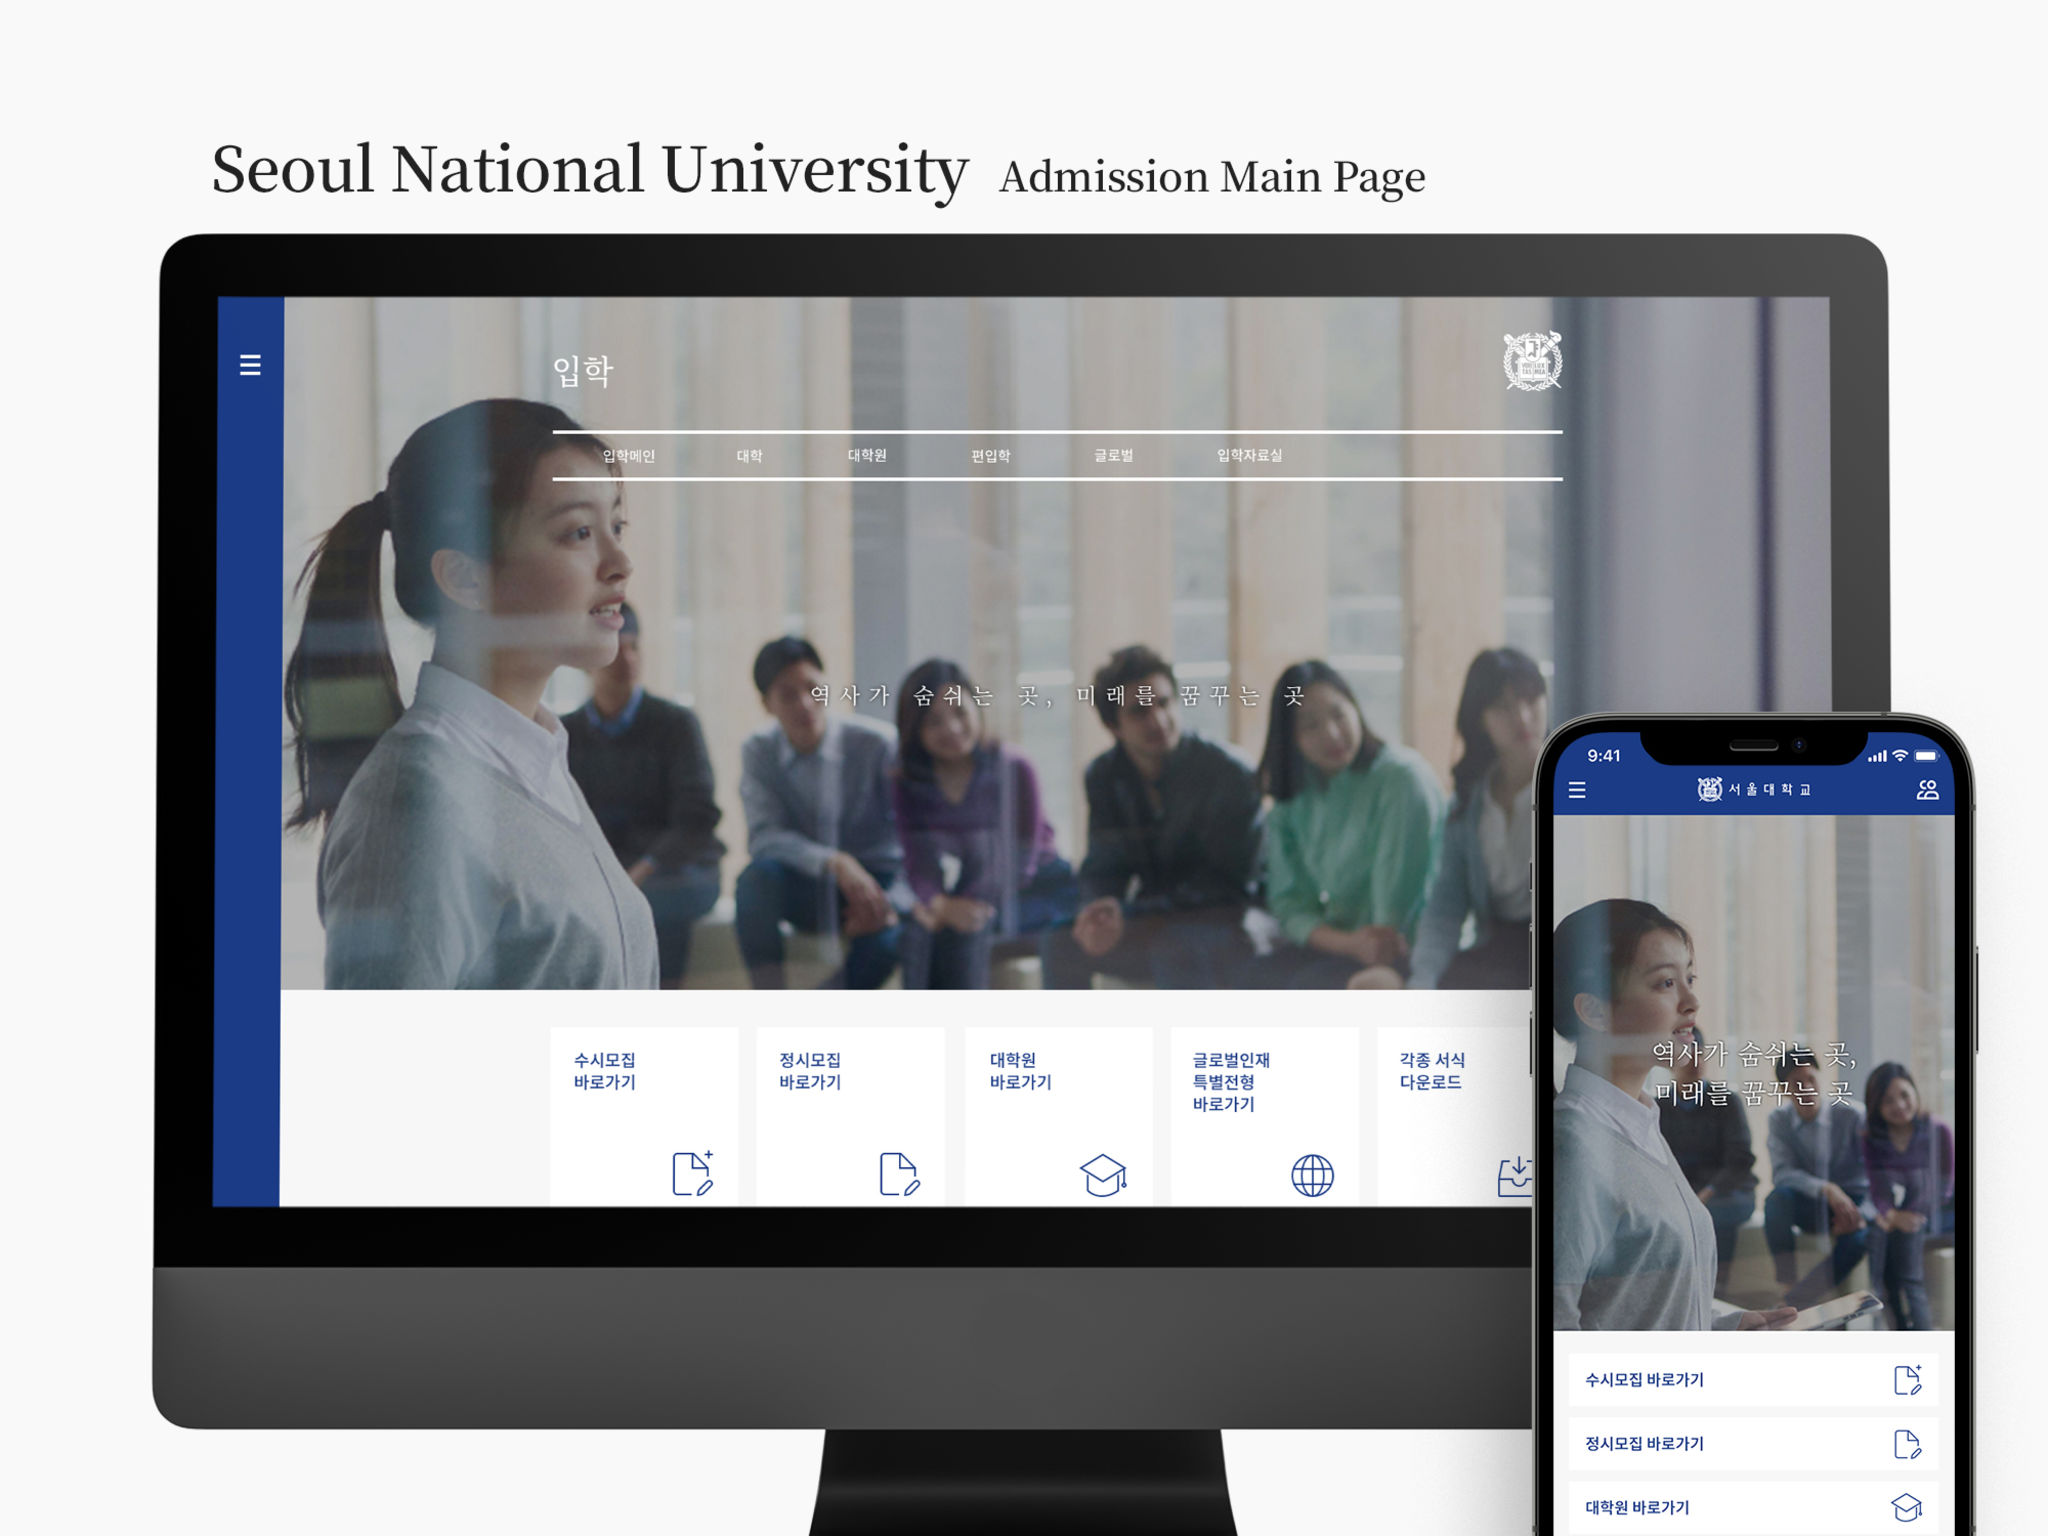 Seoul National University website